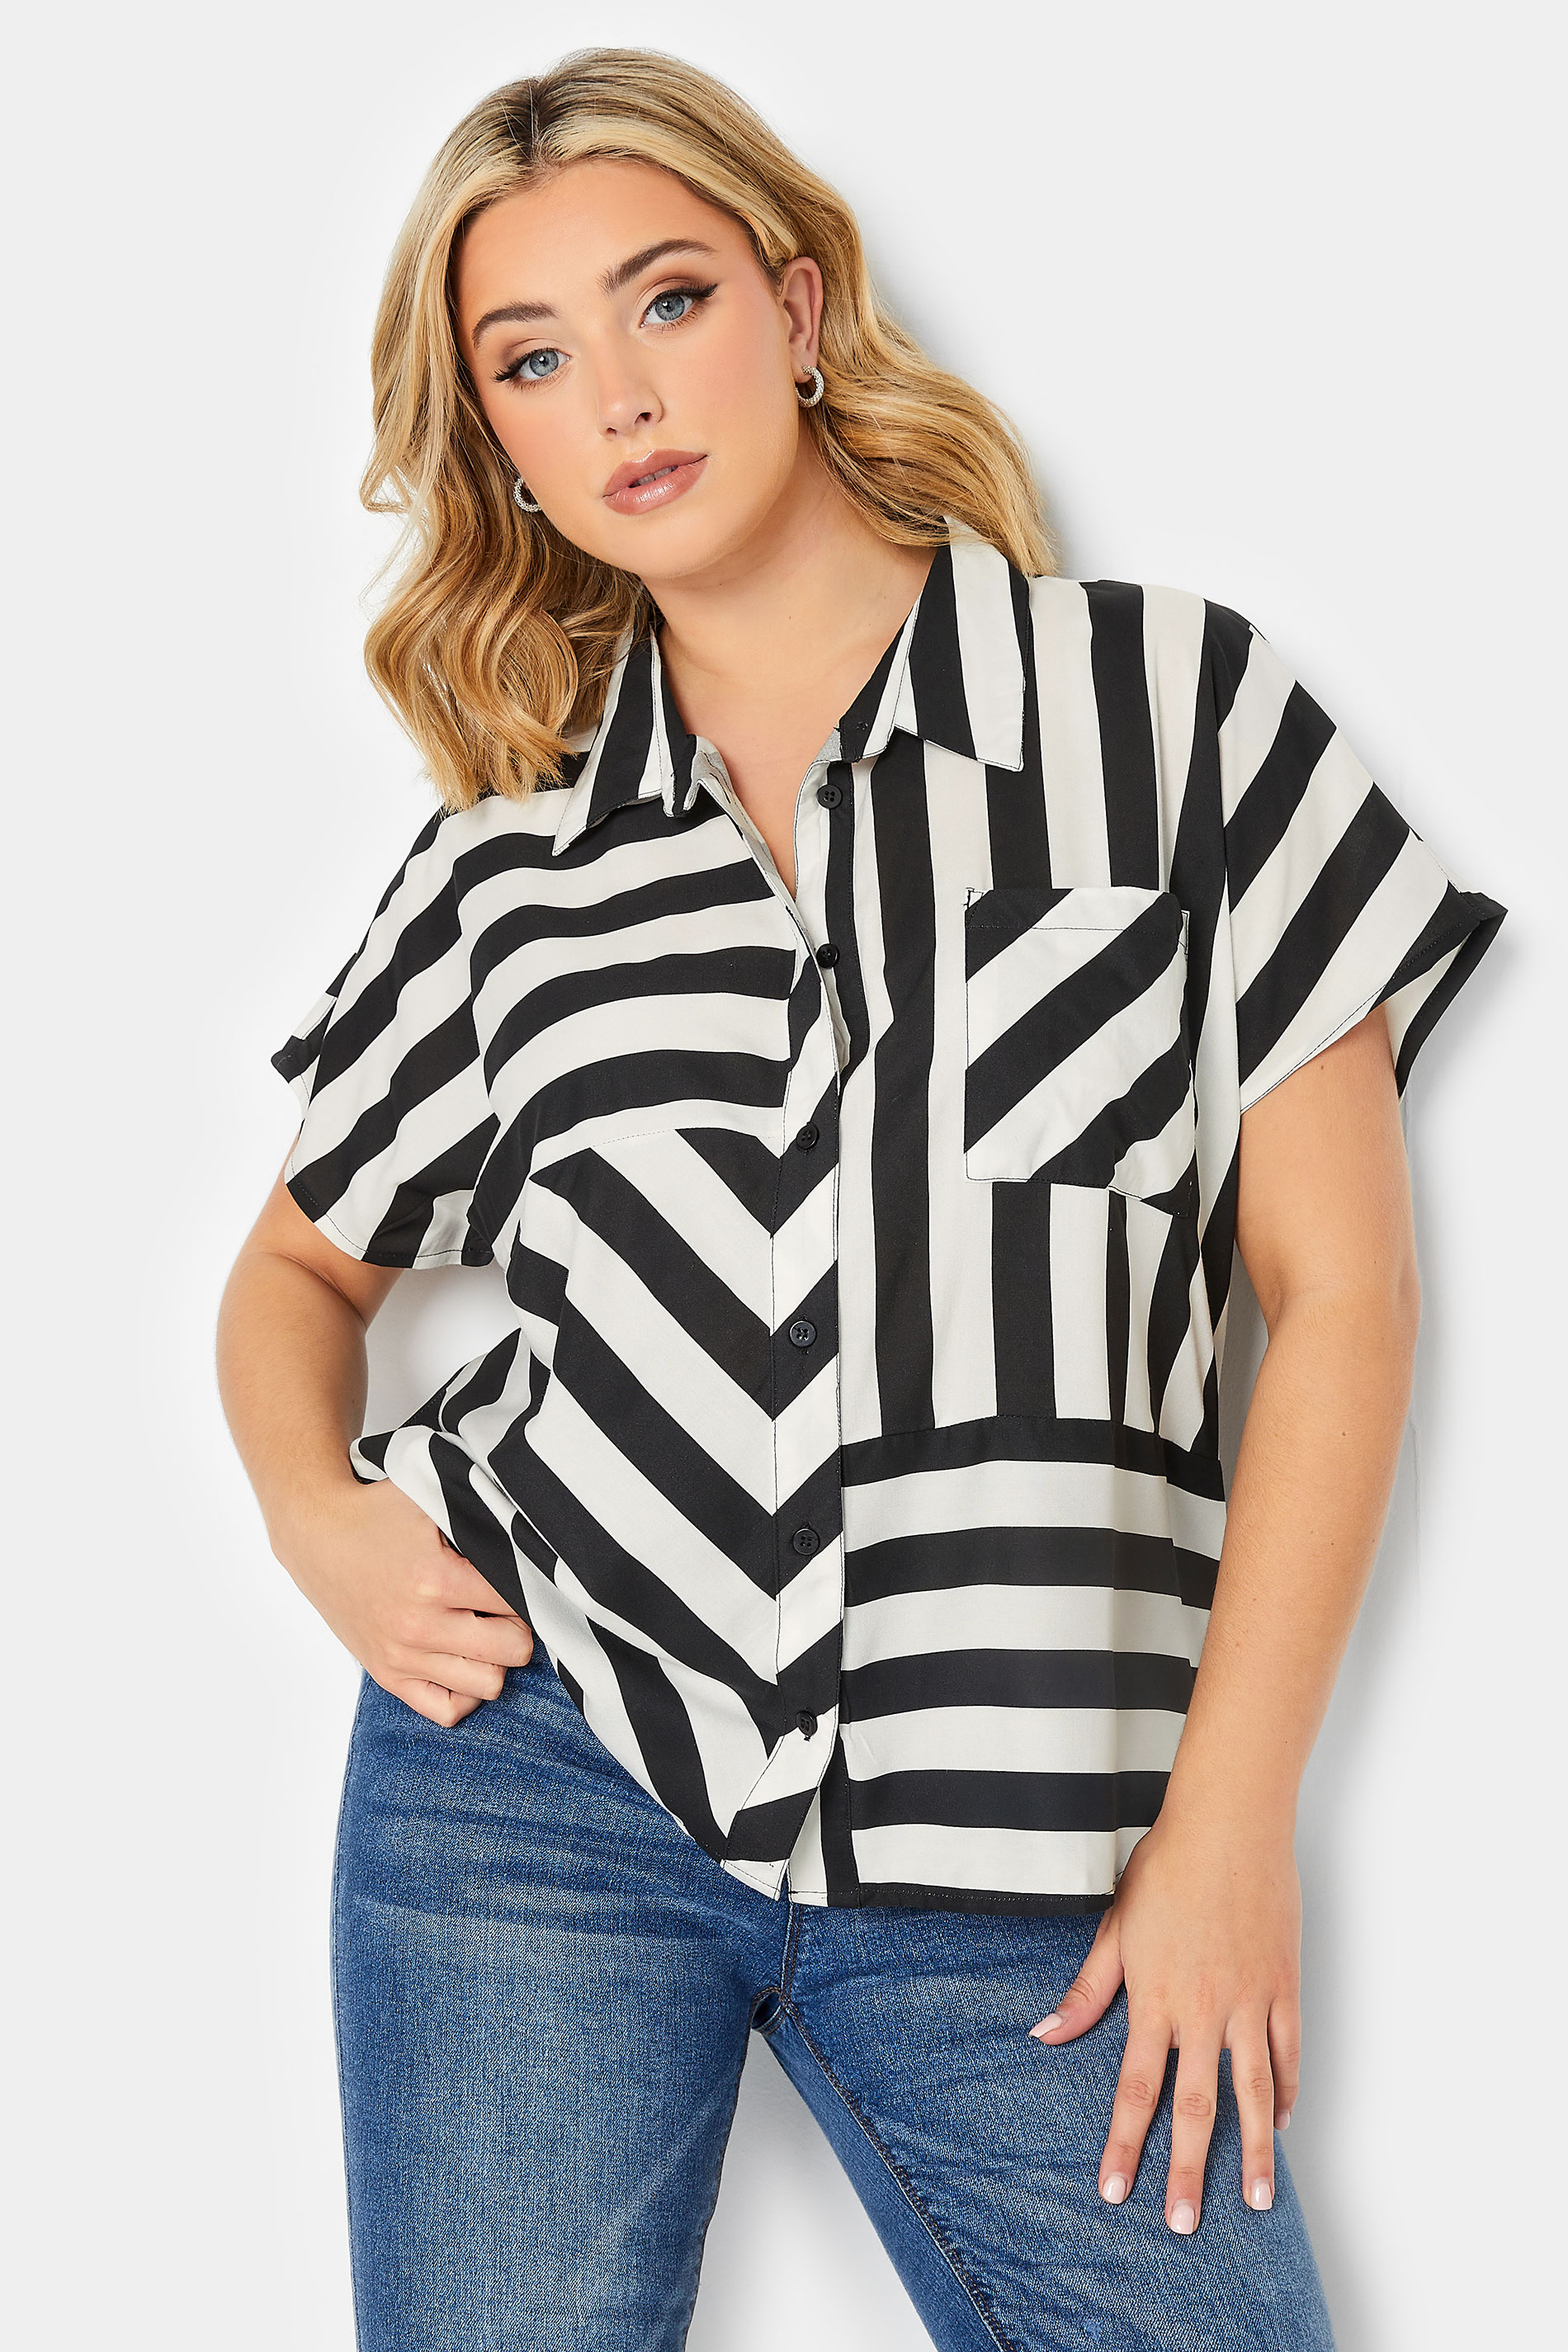 YOURS PETITE Plus Size Curve Black & White Stripe Shirt | Yours Clothing  1